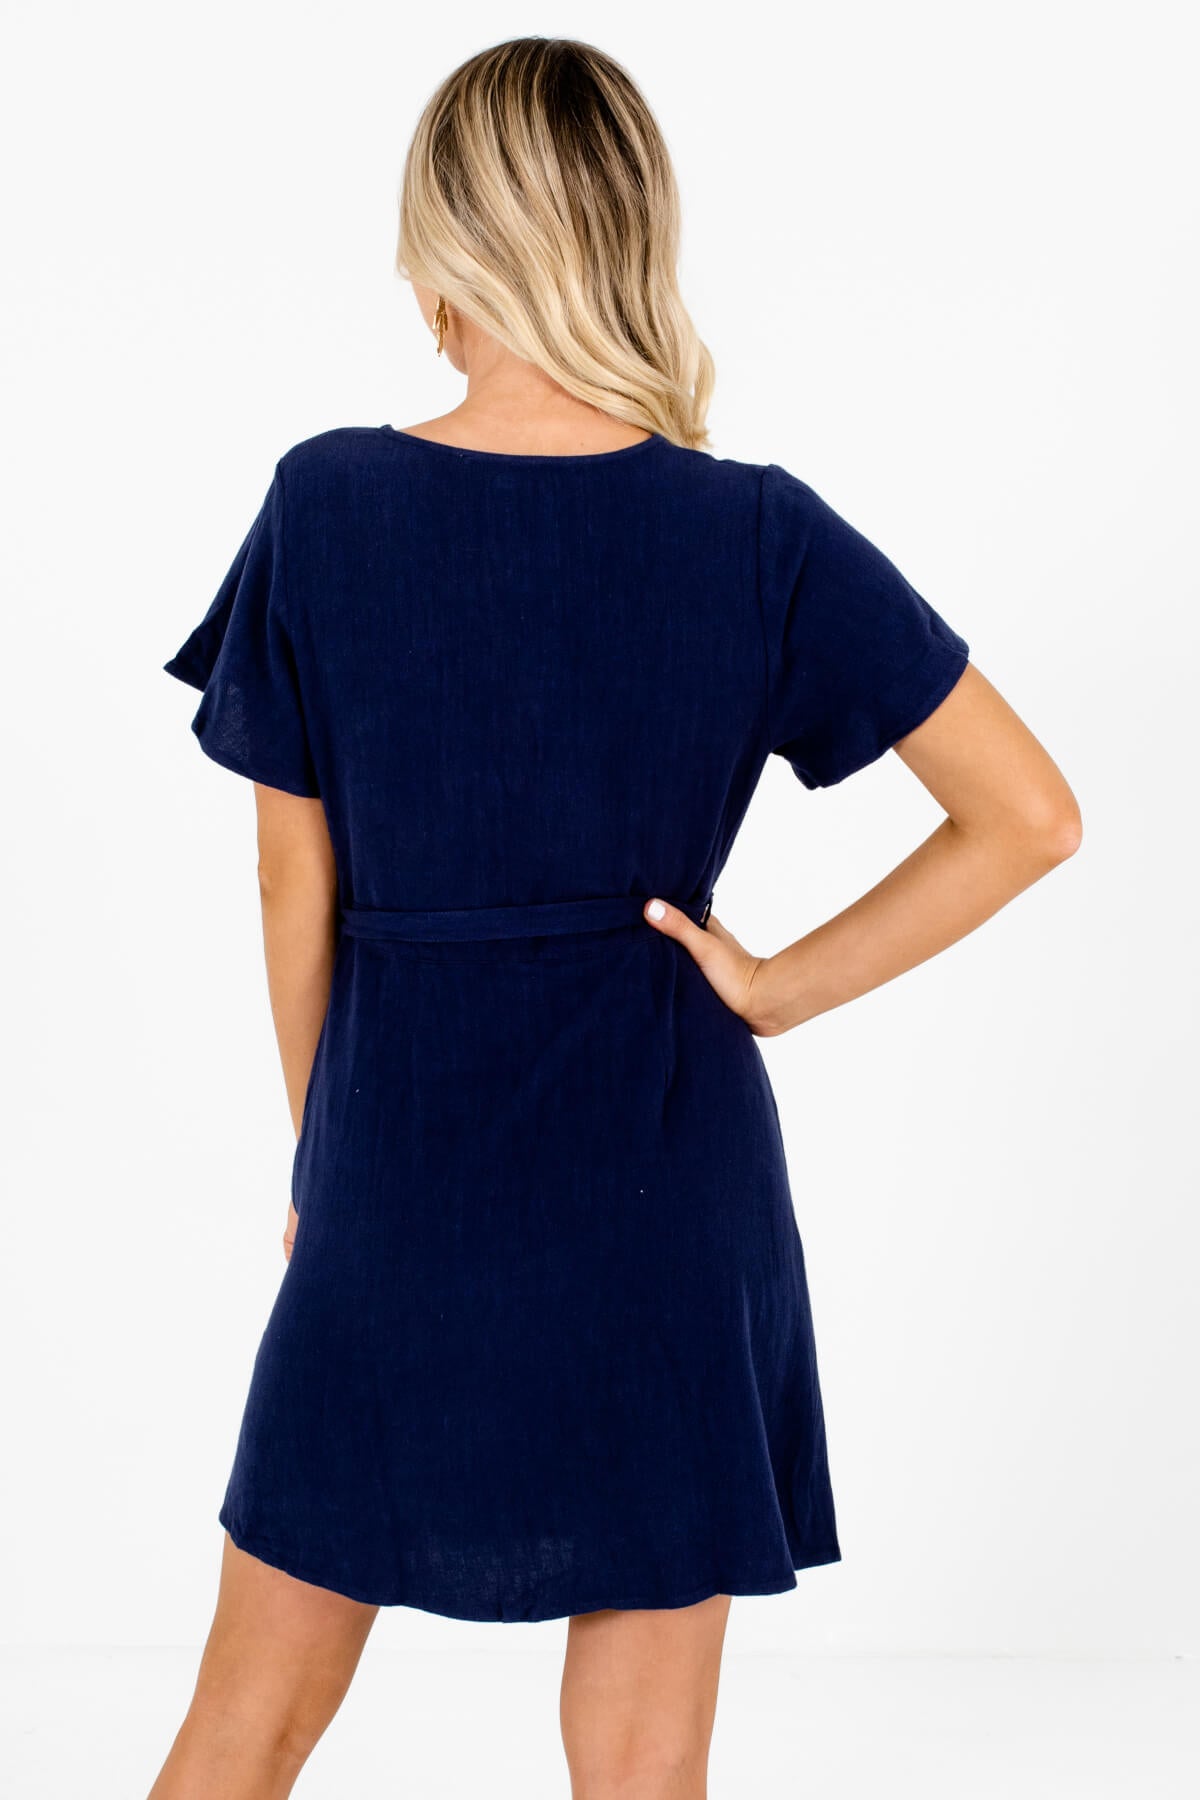 Women's Navy Blue Hook and Eye Closure Neckline Boutique Mini Dress